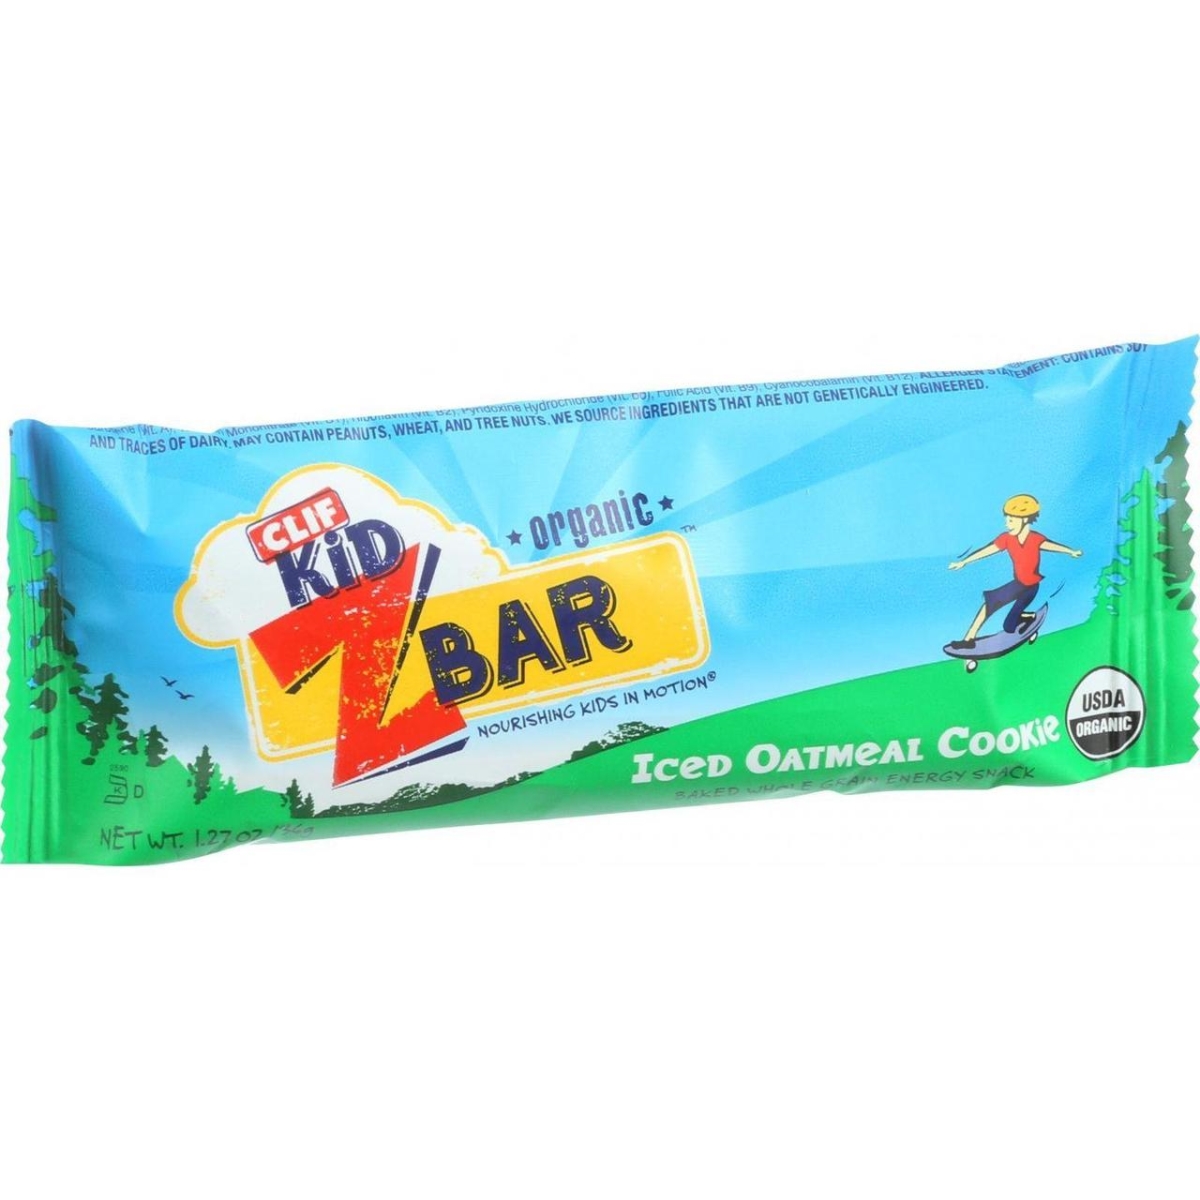 Clif Bar Hg1083005 1.27 Oz Iced Oatmeal Cookie Organic Kid Zbar - Case Of 18